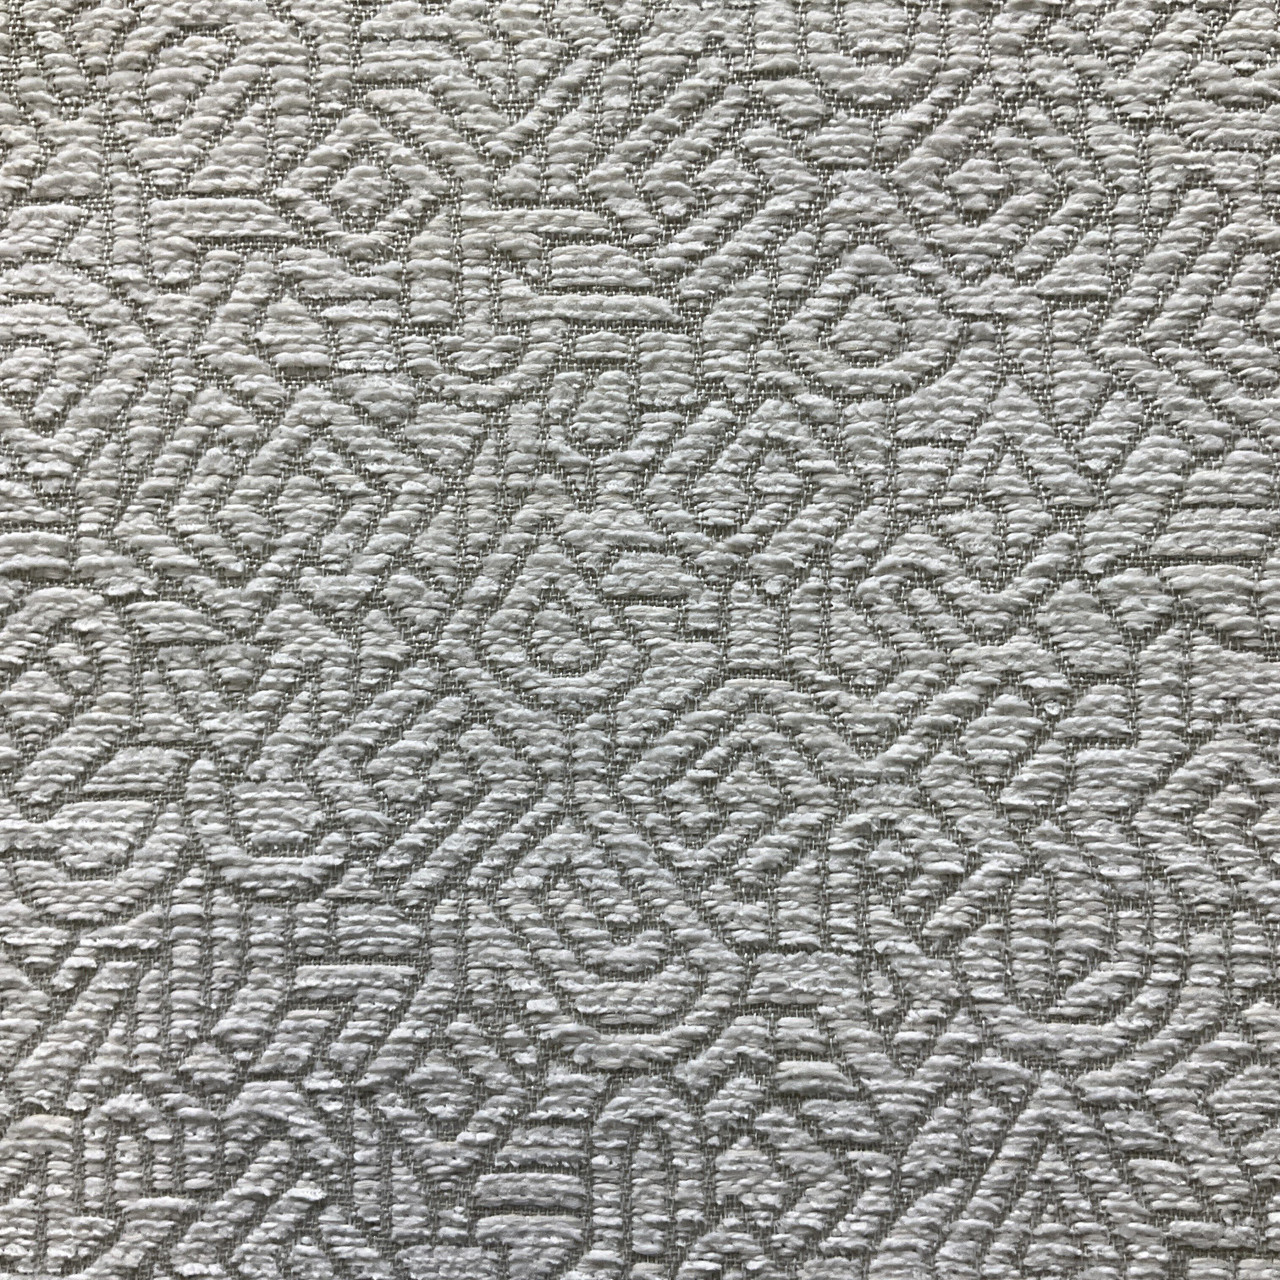 Demco Fabric Medium 120ml — Wallack's Art Supplies & Framing